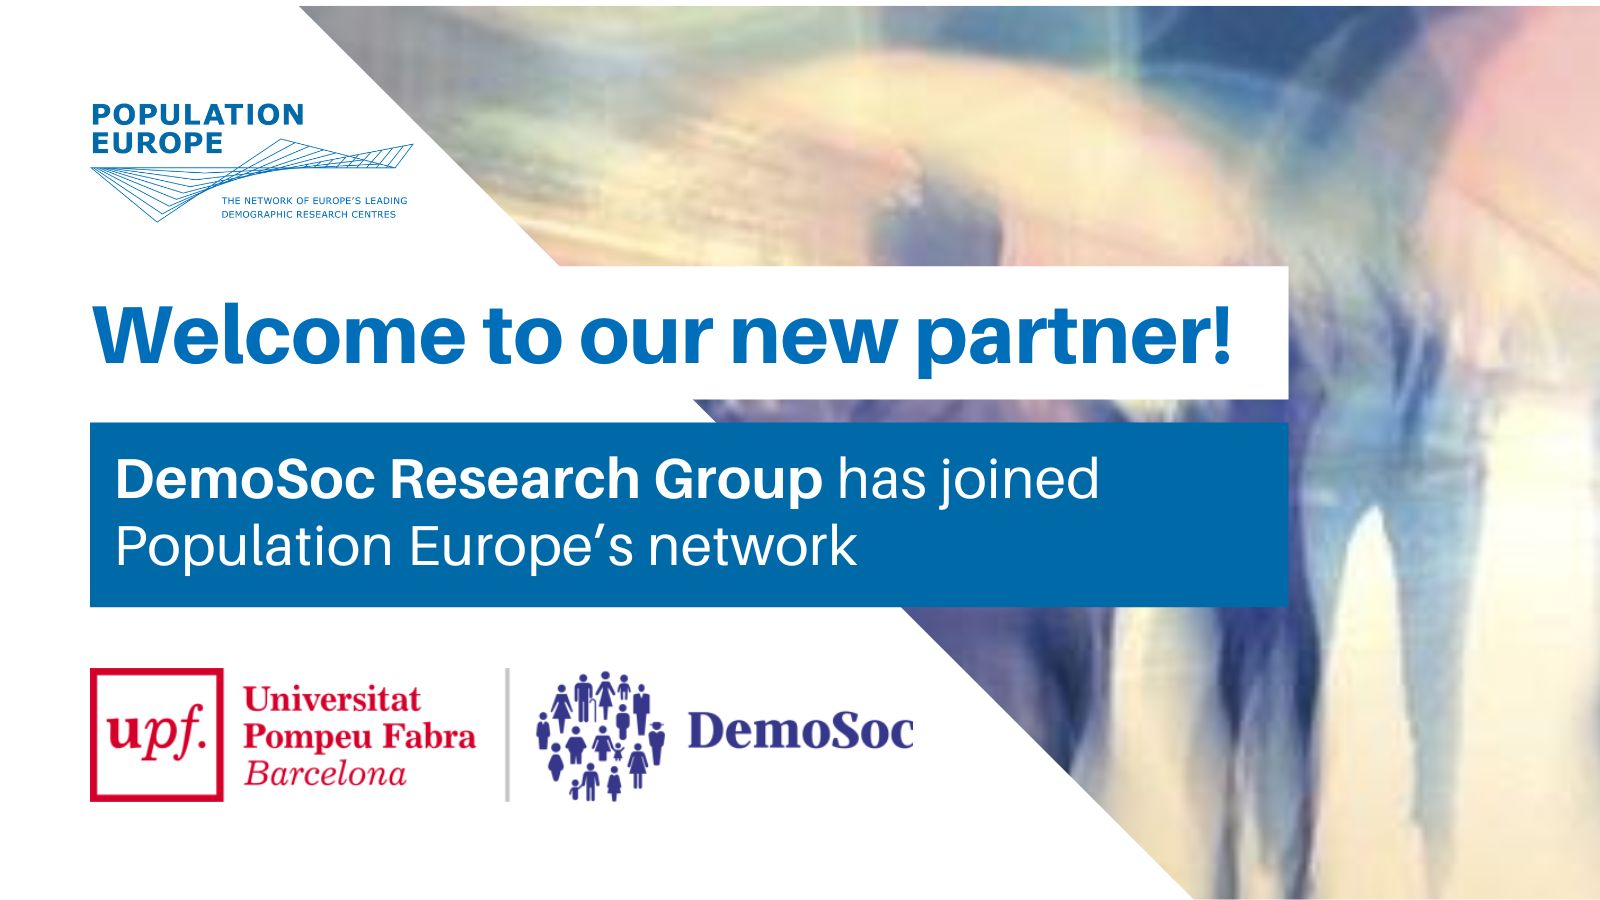 DemoSoc new partner of Population Europe